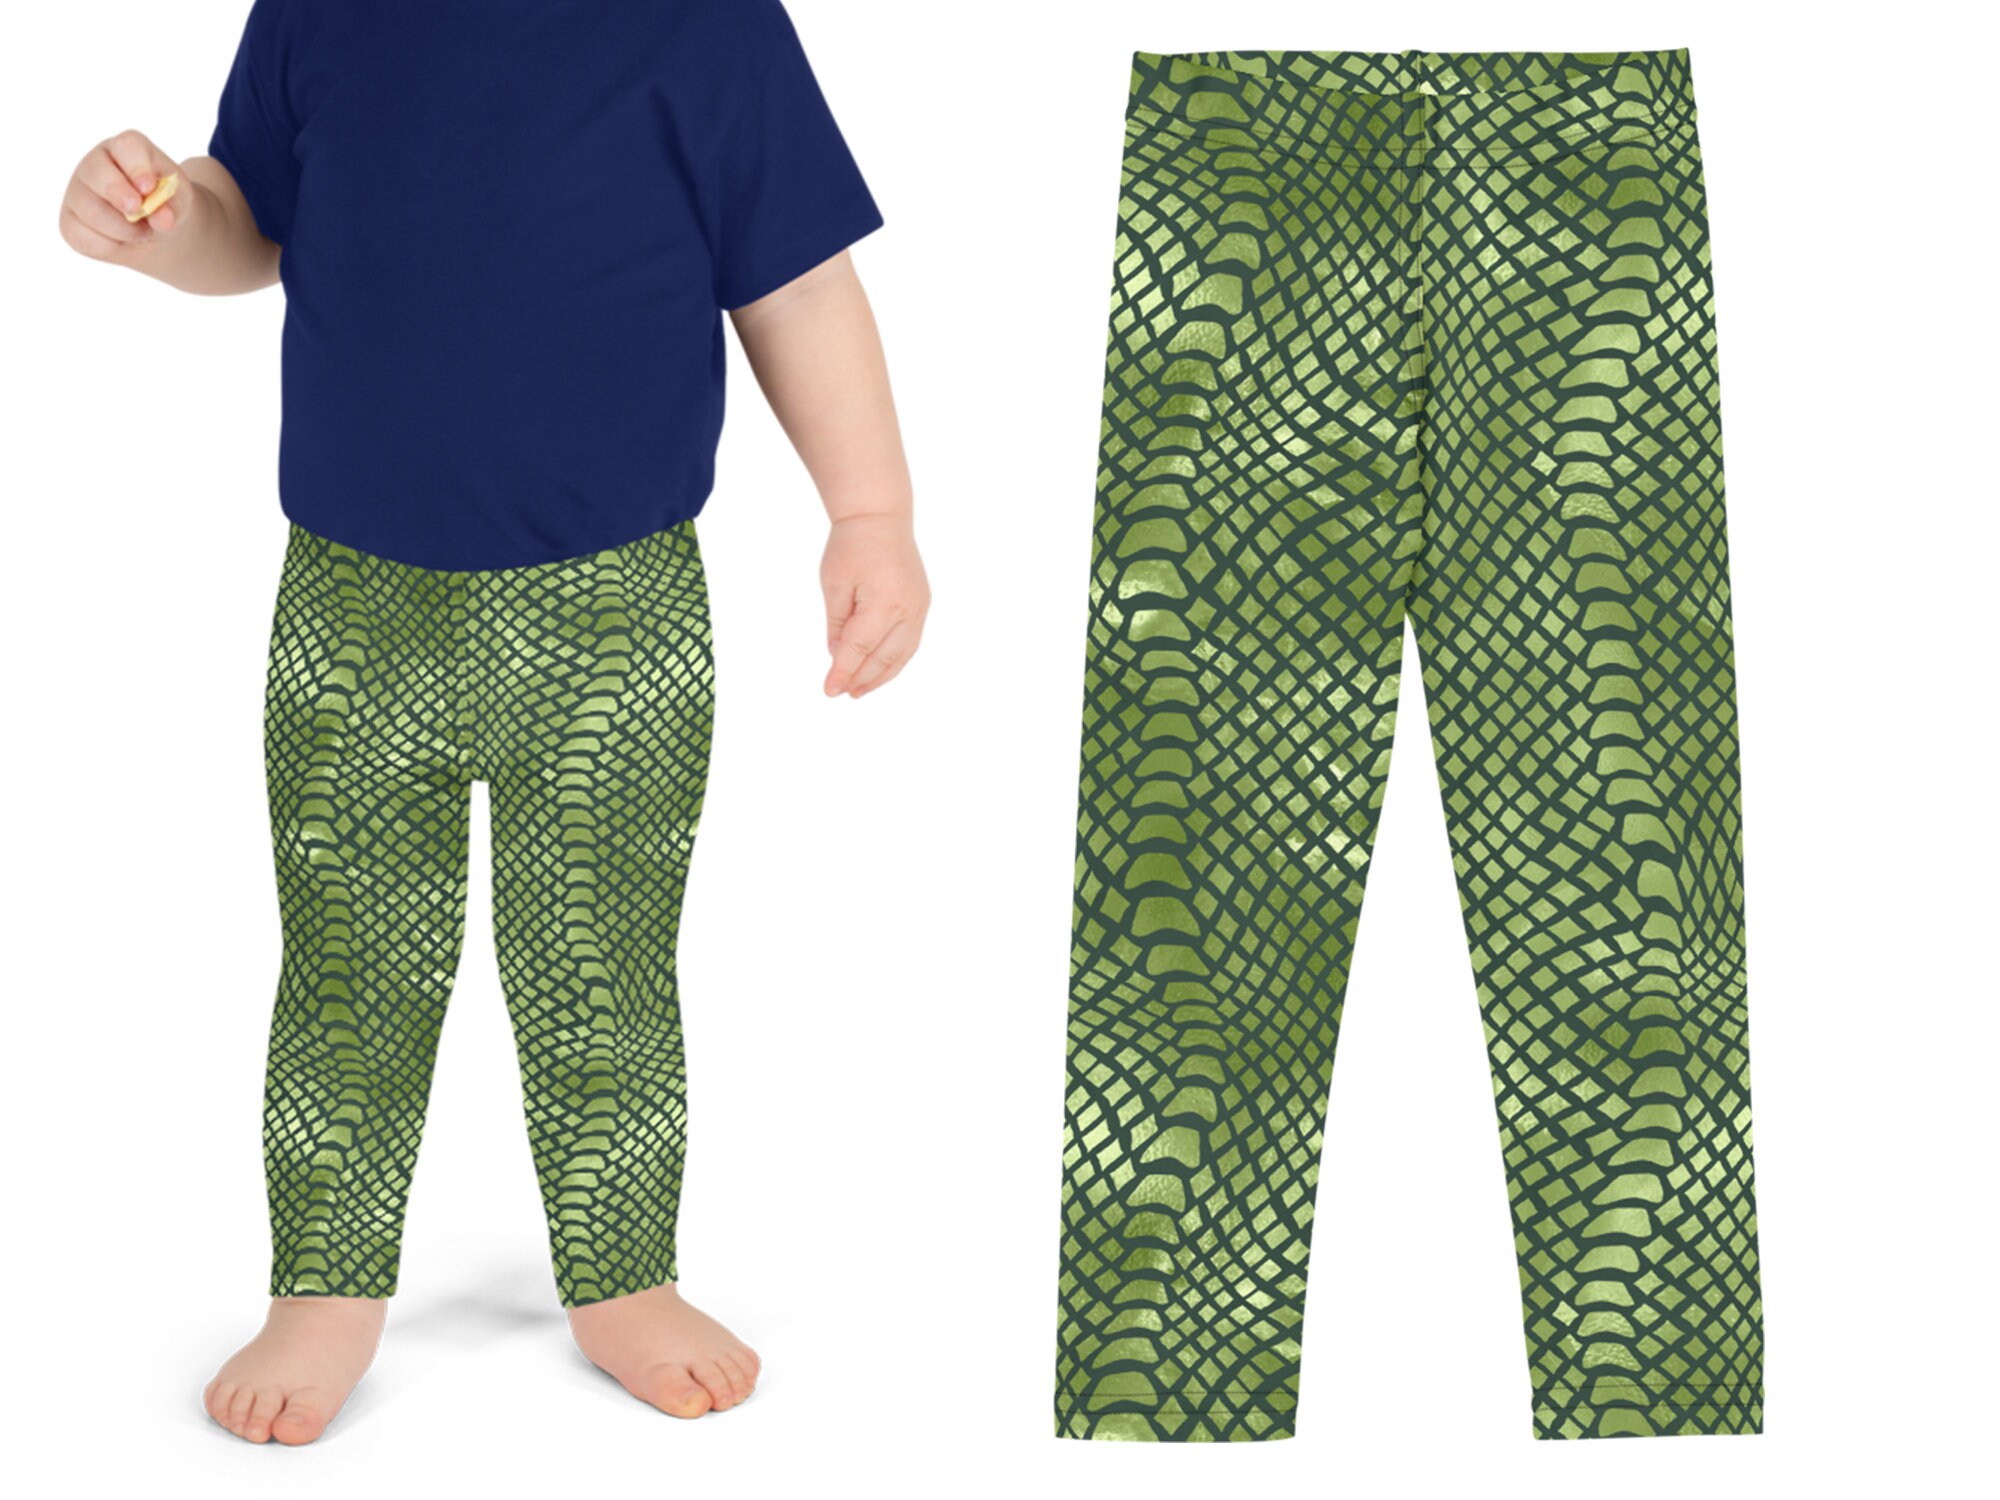 Green Crocodile Skin Leggings Yoga Pants – Cosplay Activewear